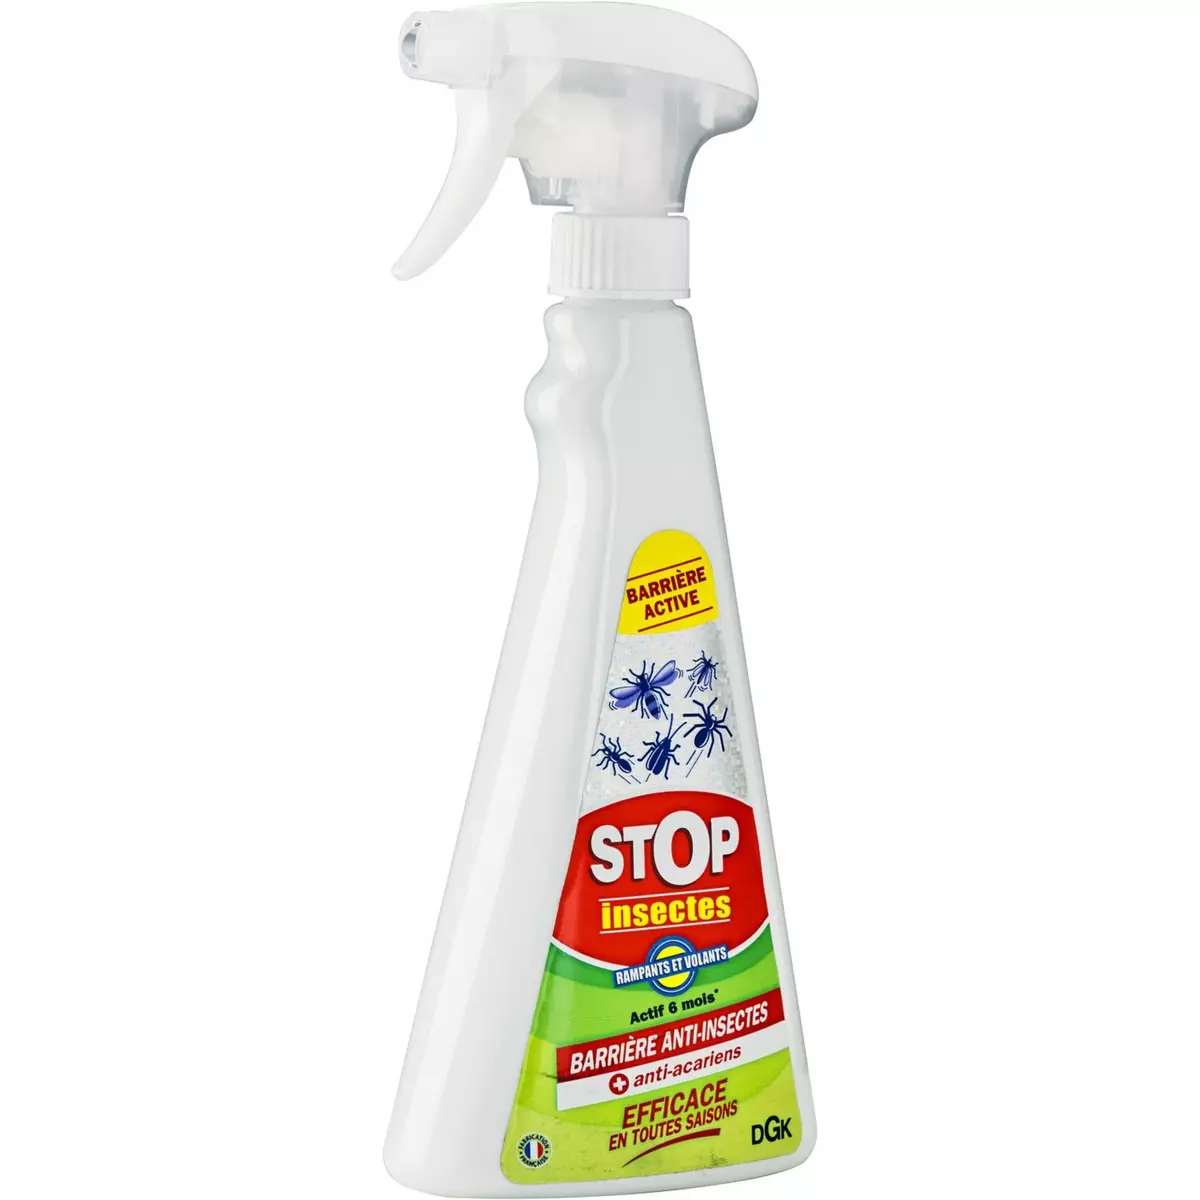 STOP INSECTES Spray barrage anti-insectes & acariens toutes saisons efficace 6 mois 600ml